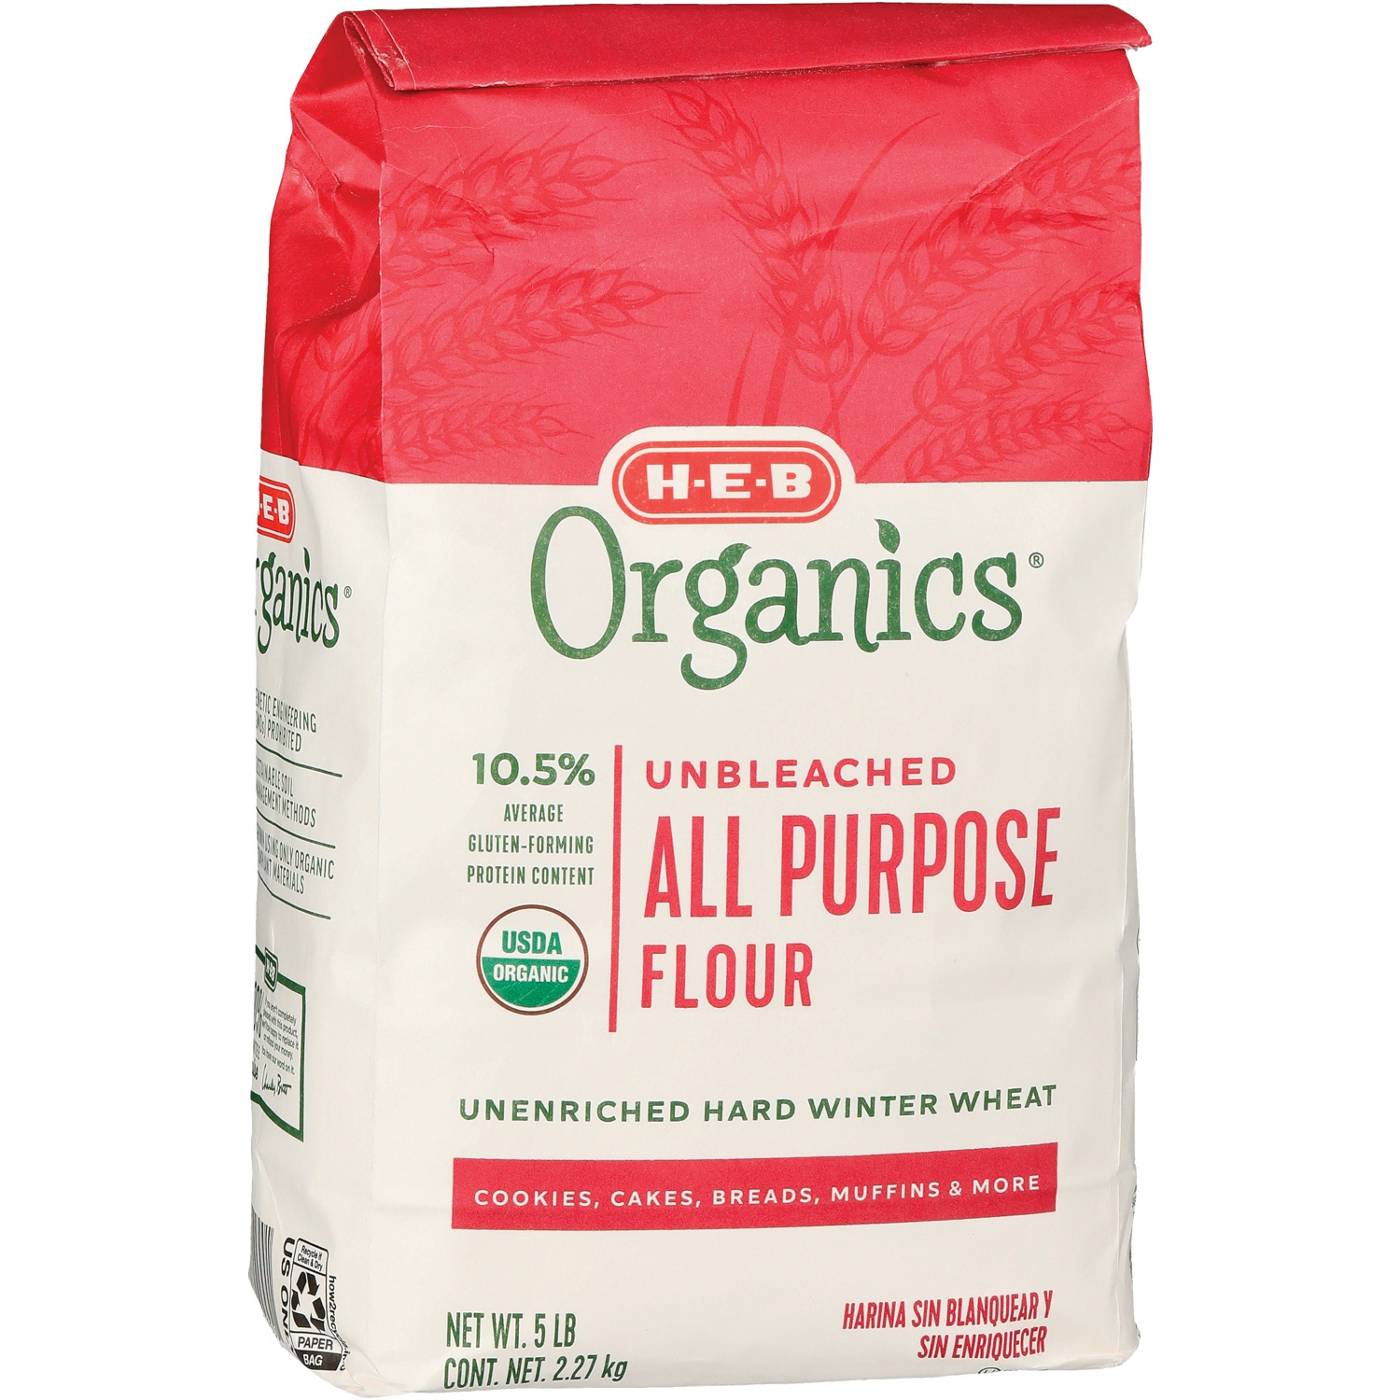 H-E-B Organics Unbleached All Purpose Flour; image 2 of 2